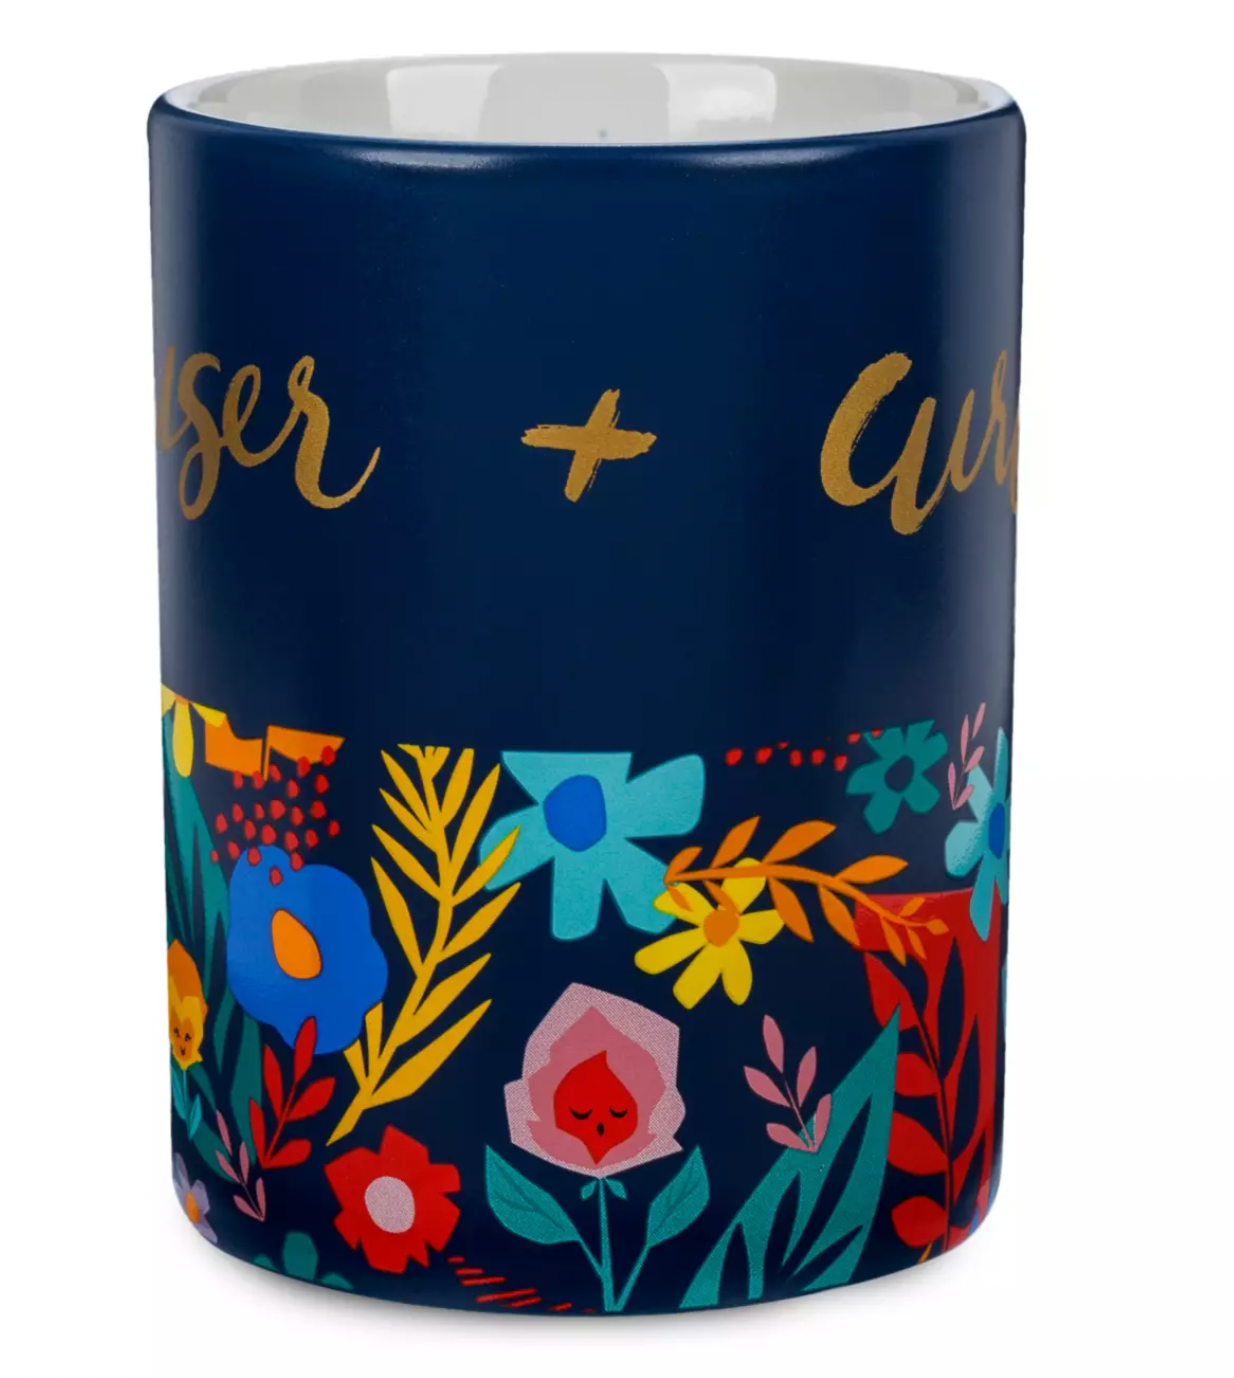 Disney Alice in Wonderland Curiouser Ceramic Coffee Mug New